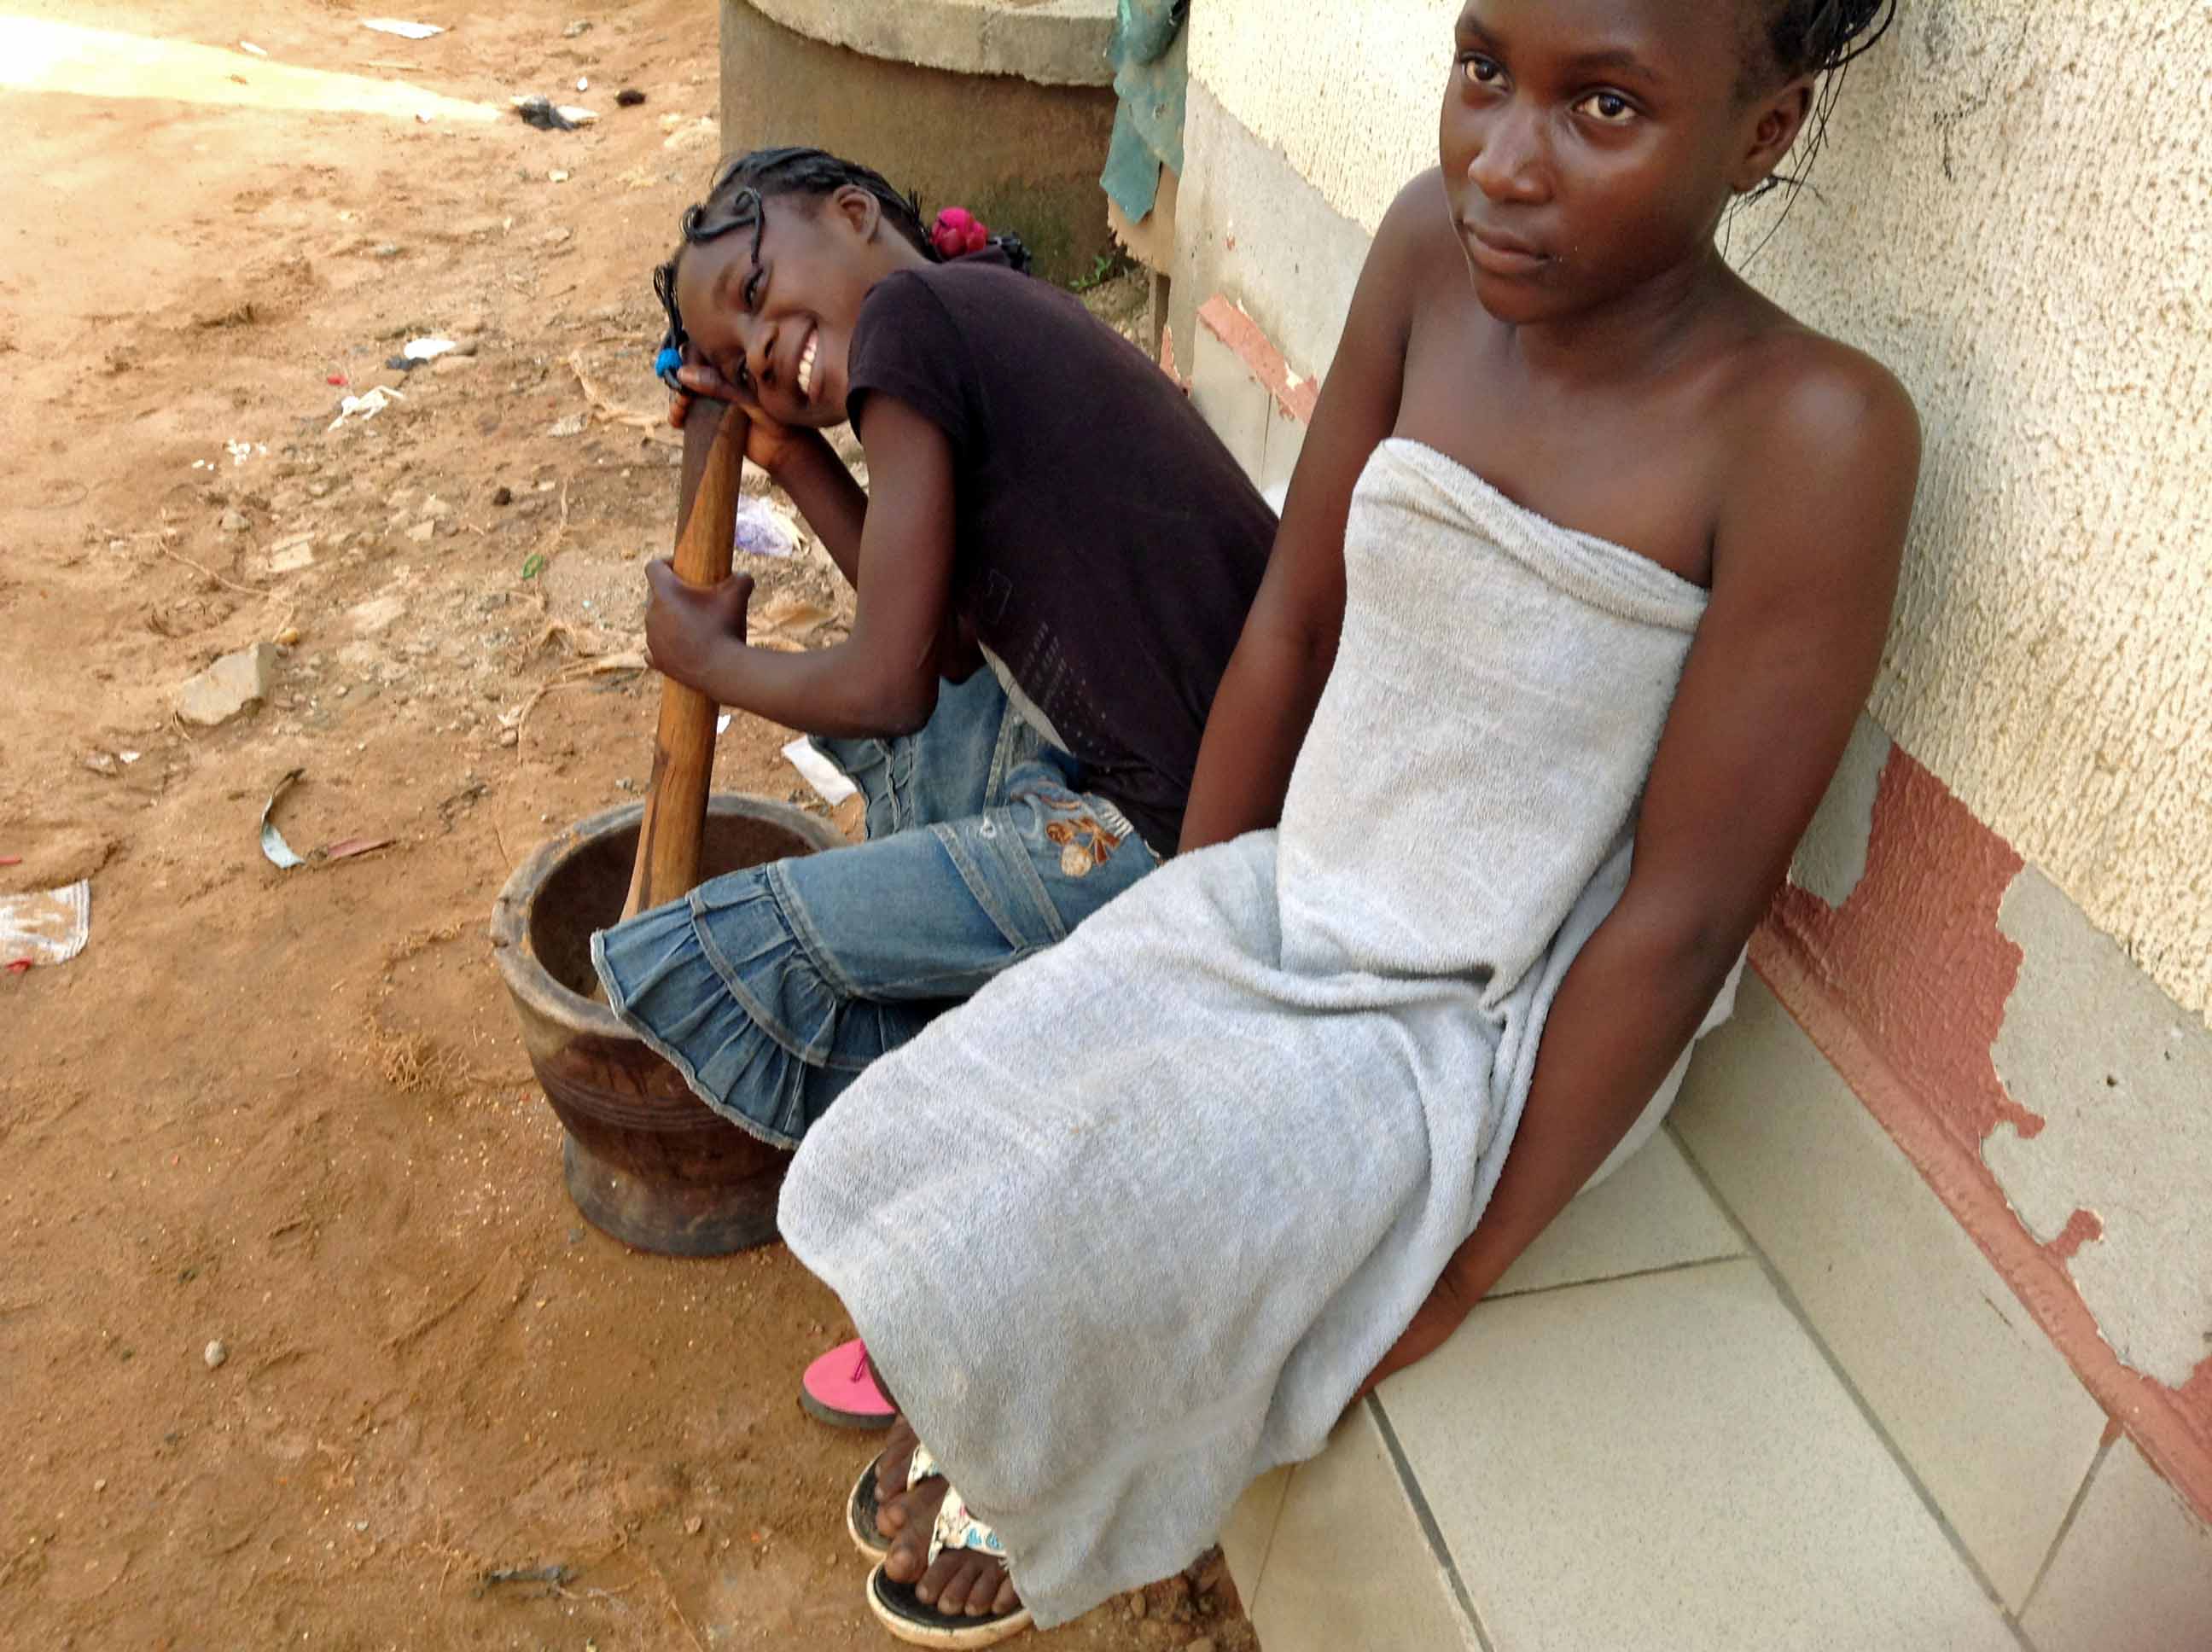 Lungu Village Kids (Picture of The Week 07-24-15)